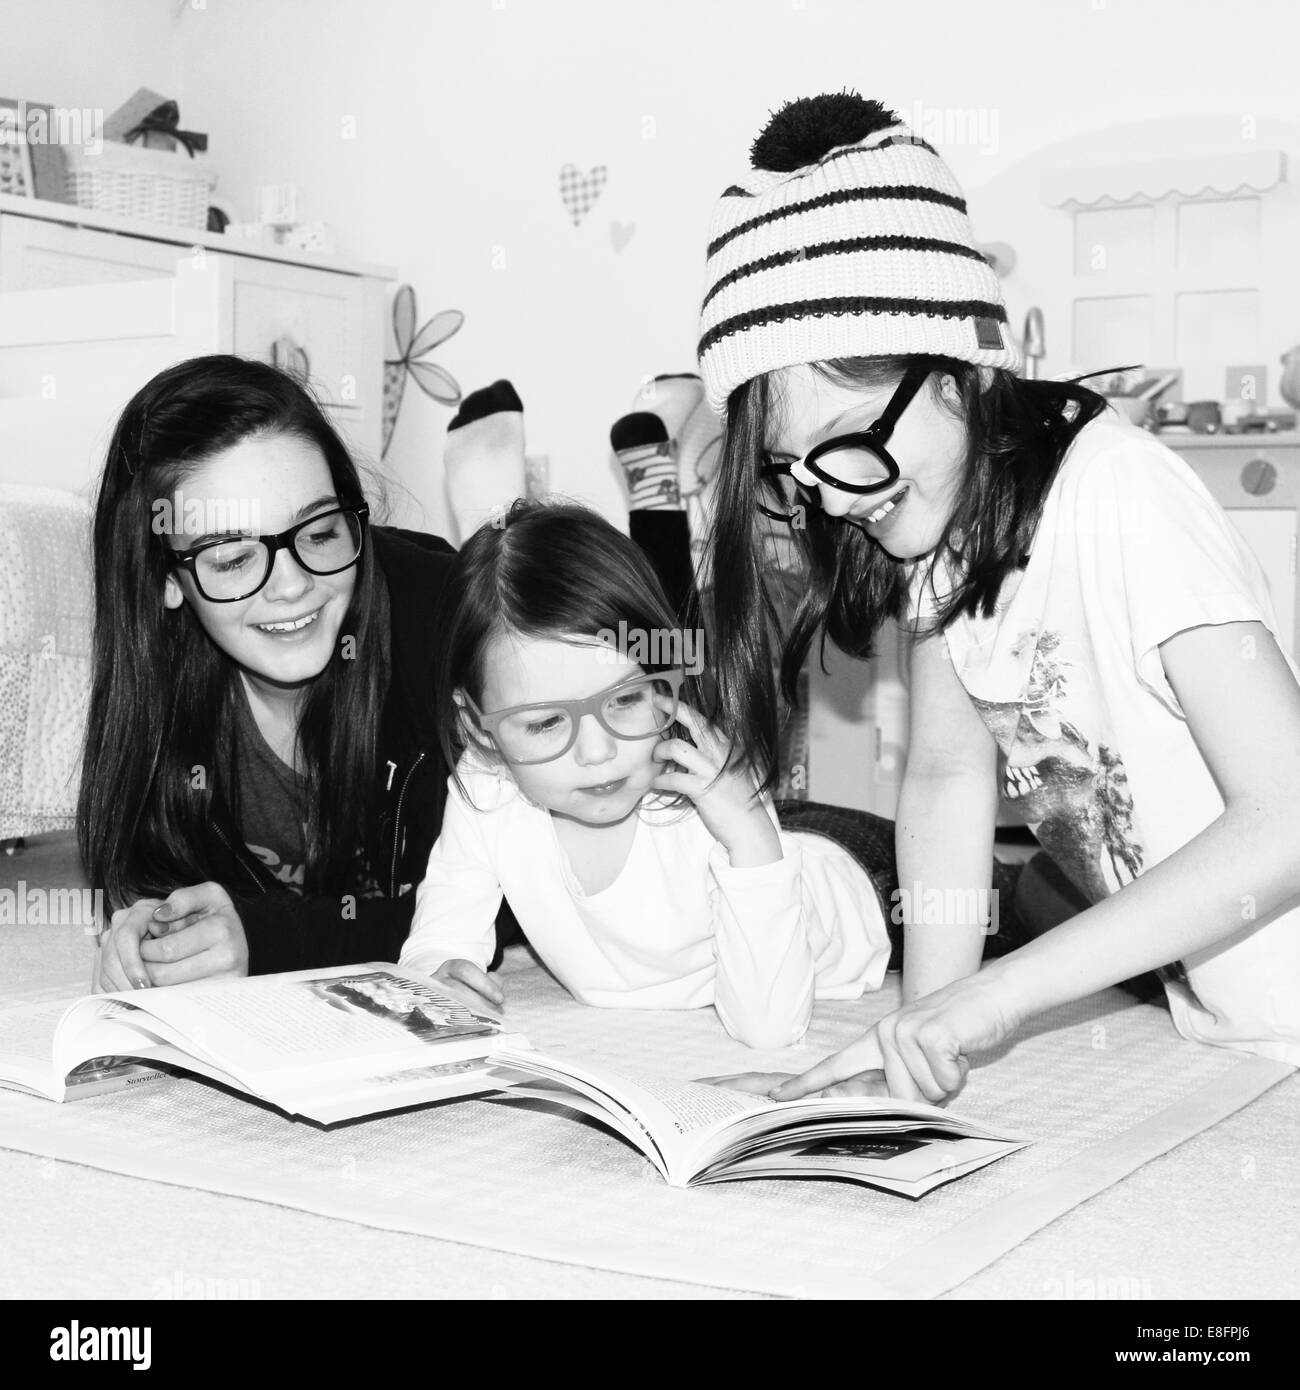 Portrait of three smiling girls reading books Stock Photo